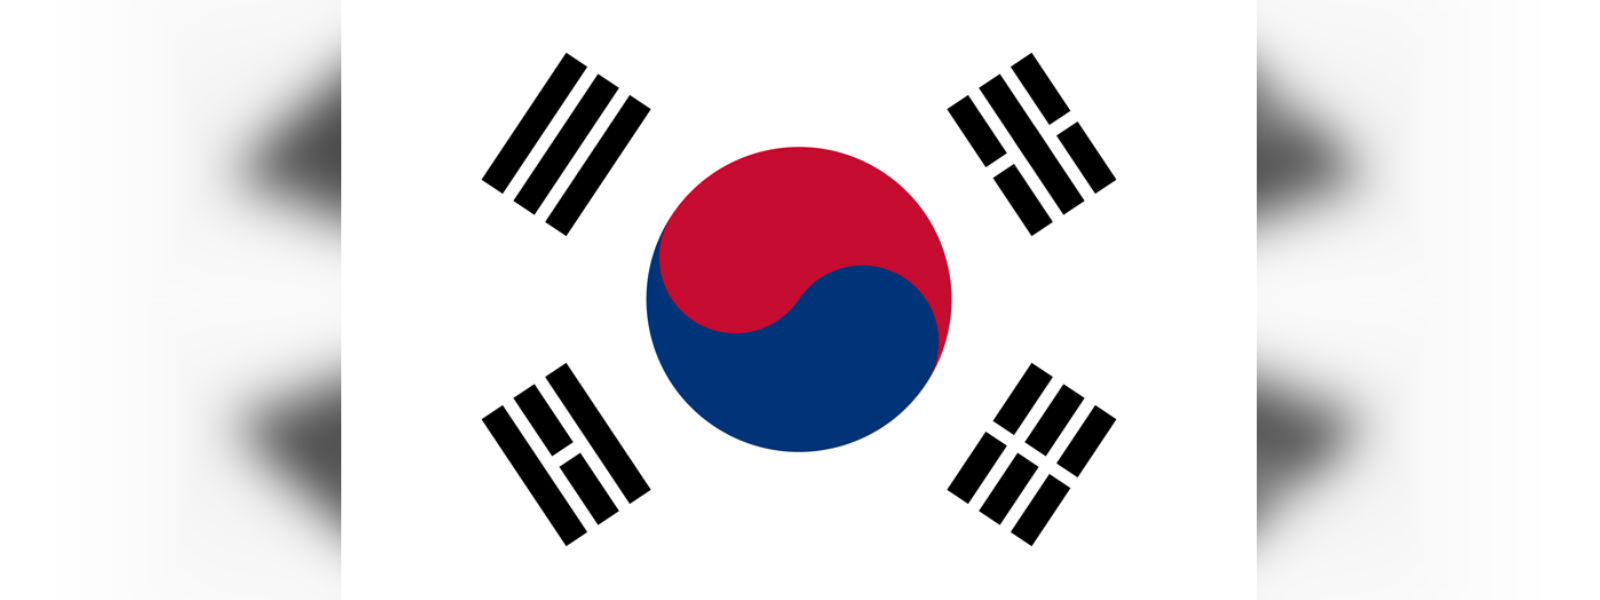 South Korea says talks with Japan enhanced mutual understanding